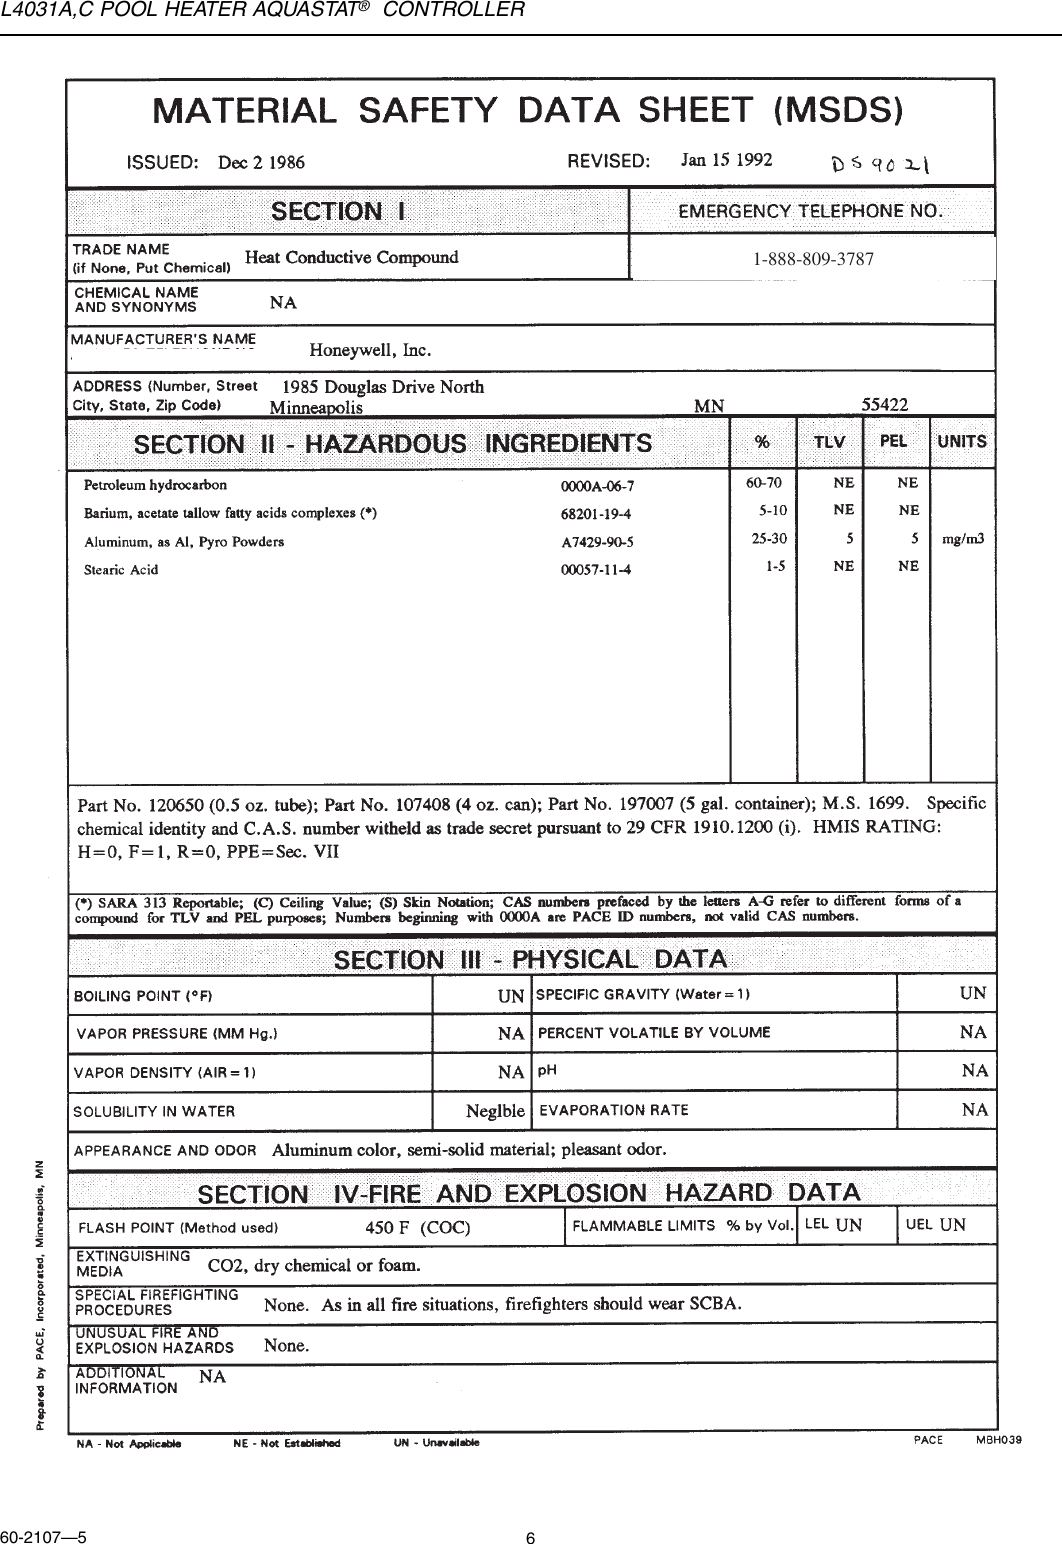 Page 6 of 12 - Honeywell Honeywell-C-Users-Manual- 60-2107 - L4031A,C Pool Heater Aquastat® Controller  Honeywell-c-users-manual